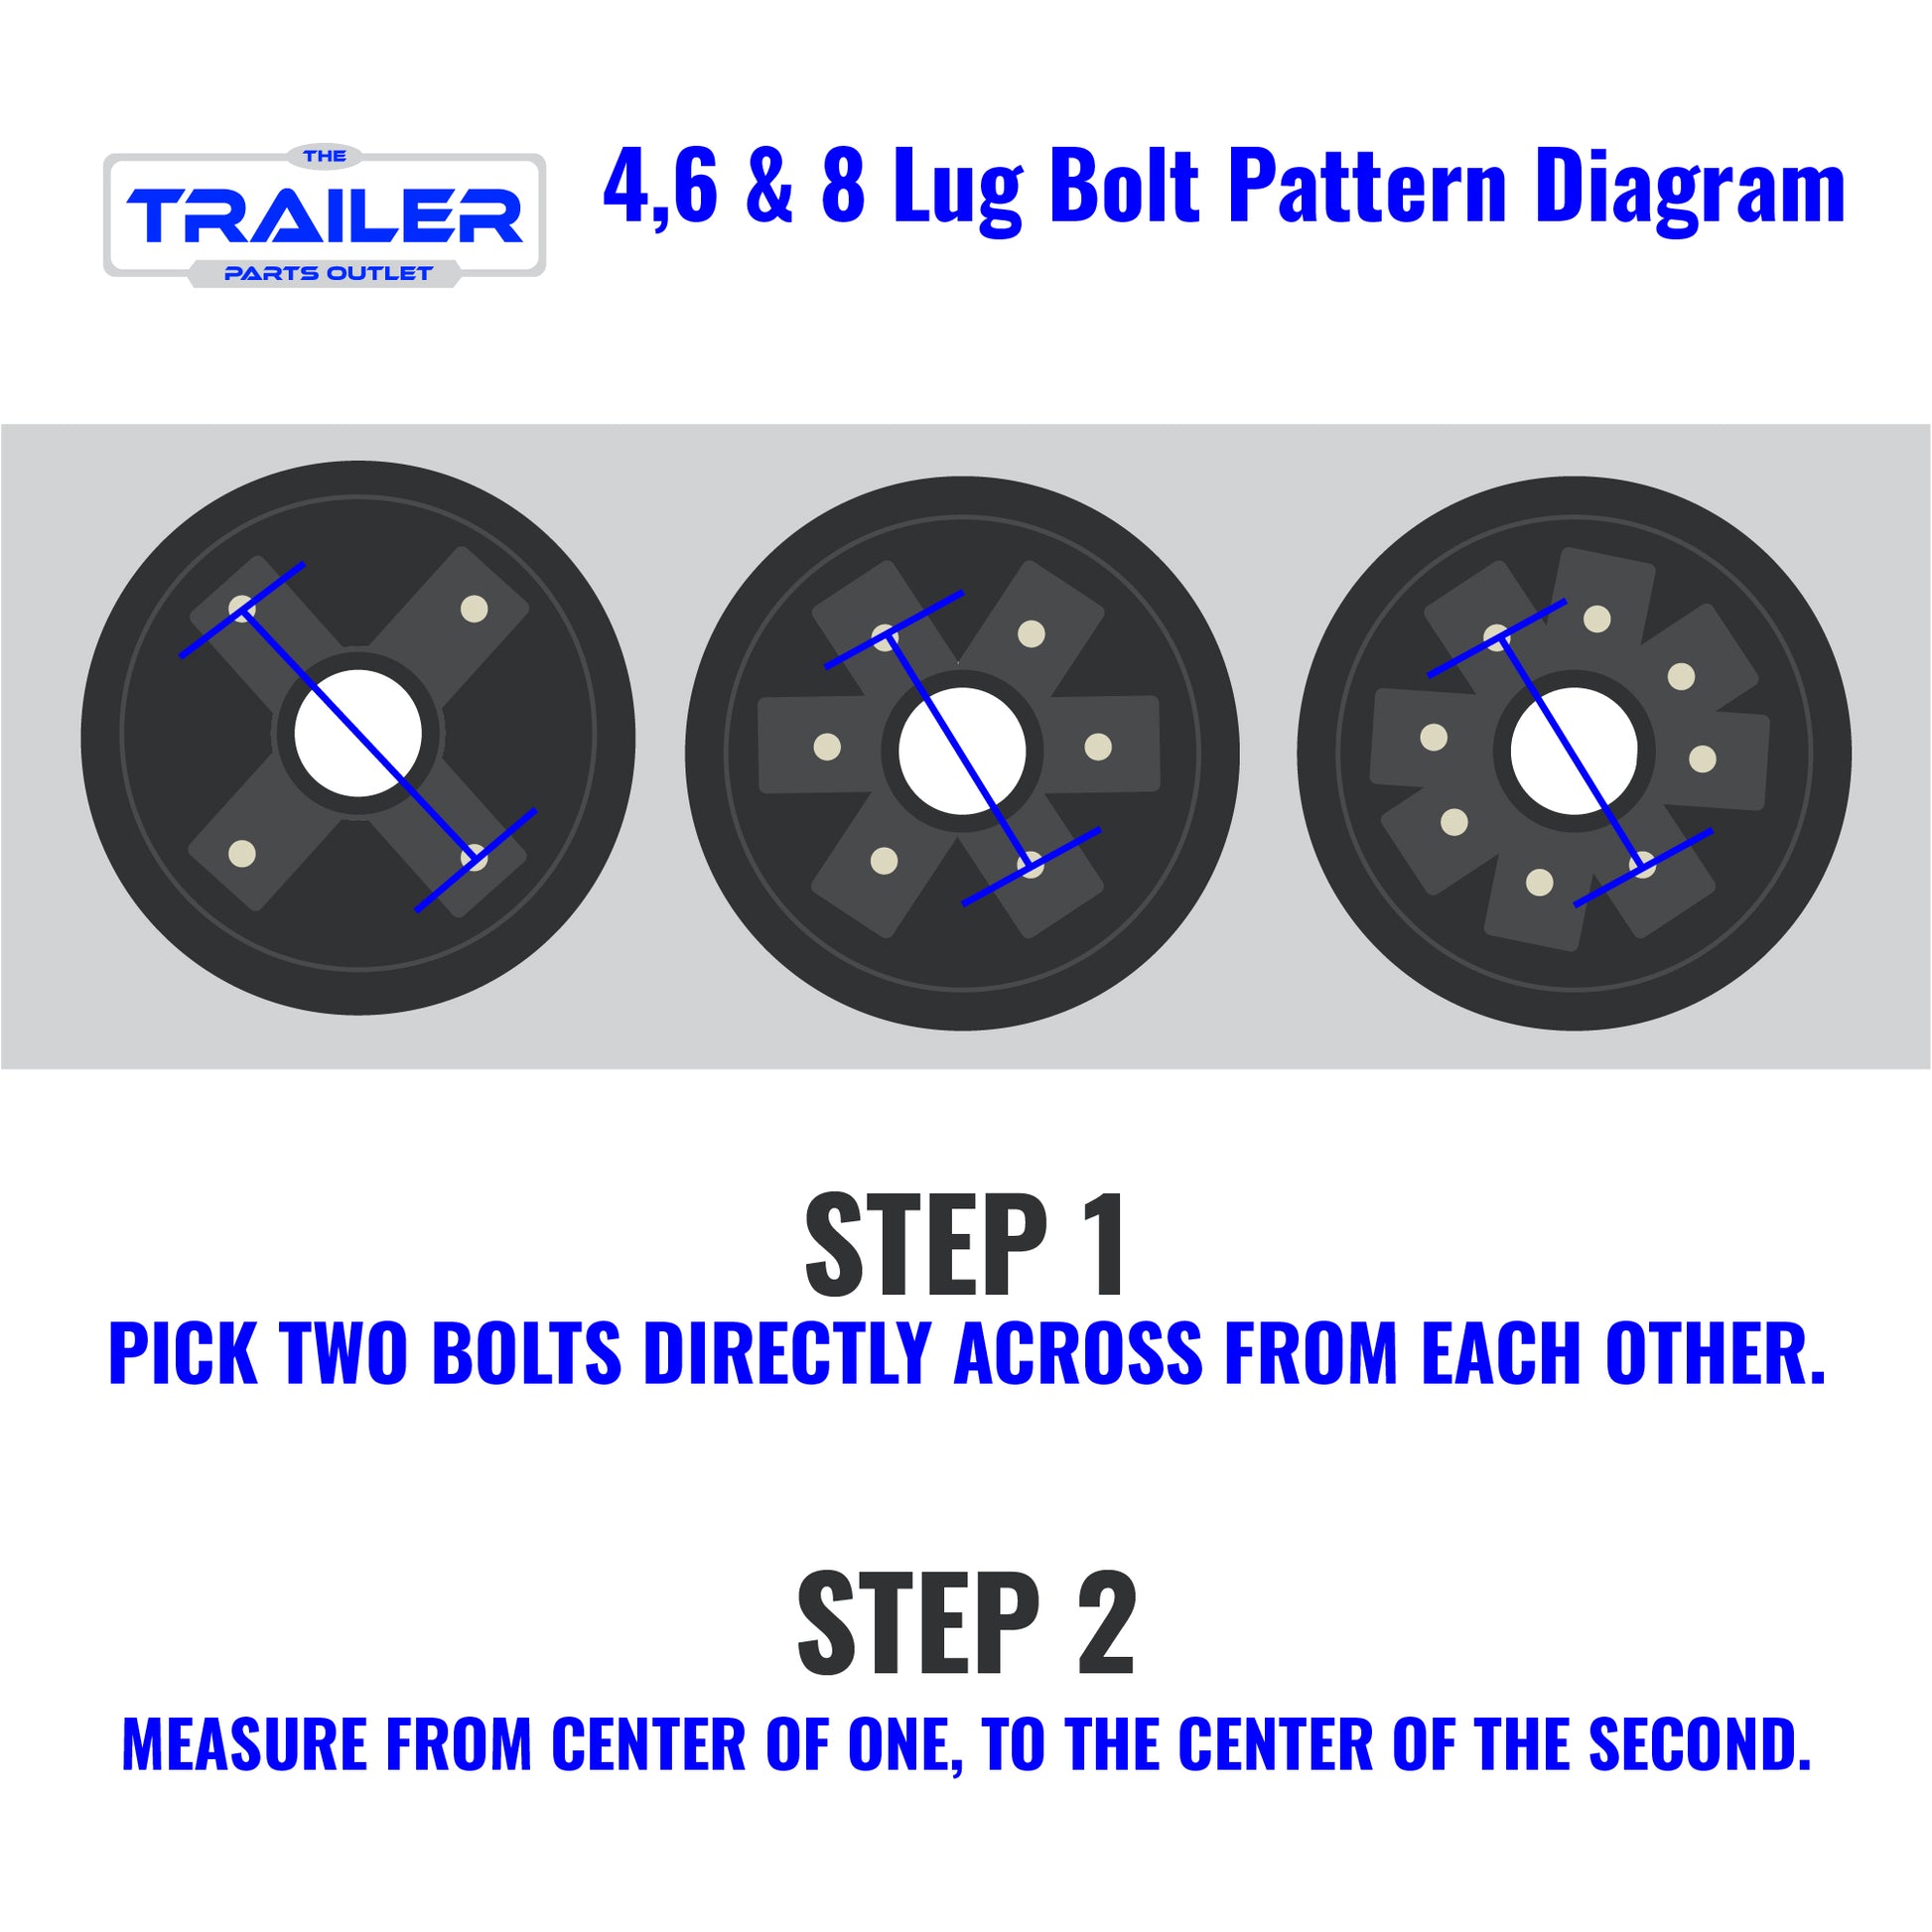 Lug Bolt Pattern Diagram Steps 1&2